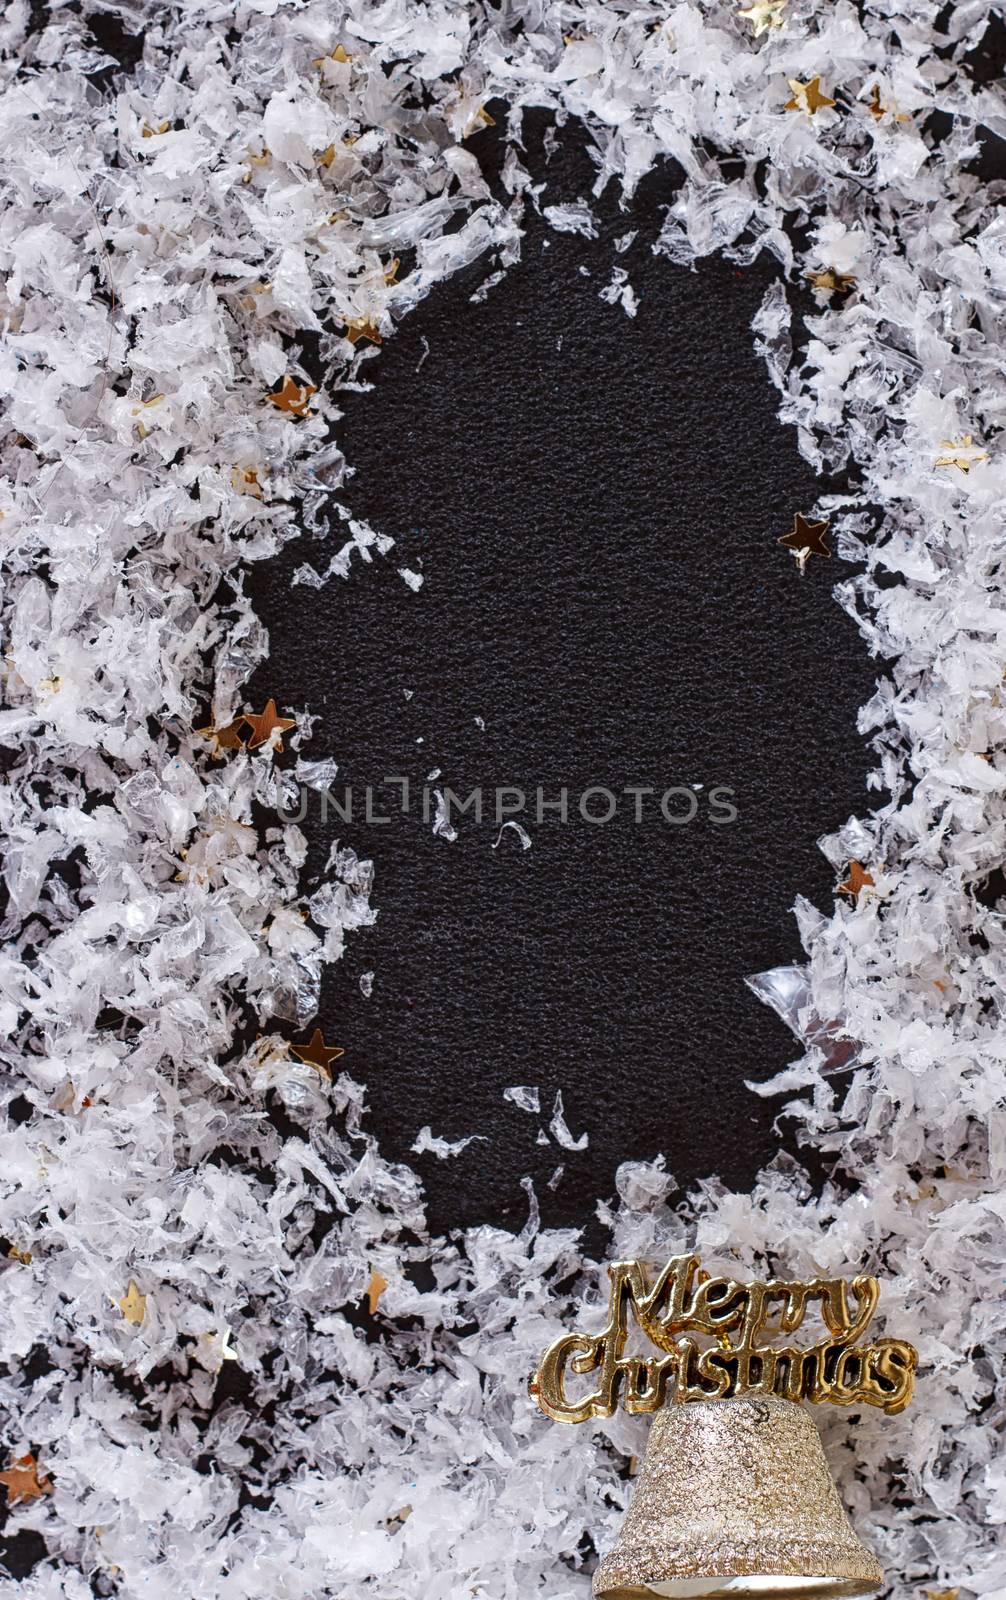 Snow flakes on dark background by victosha